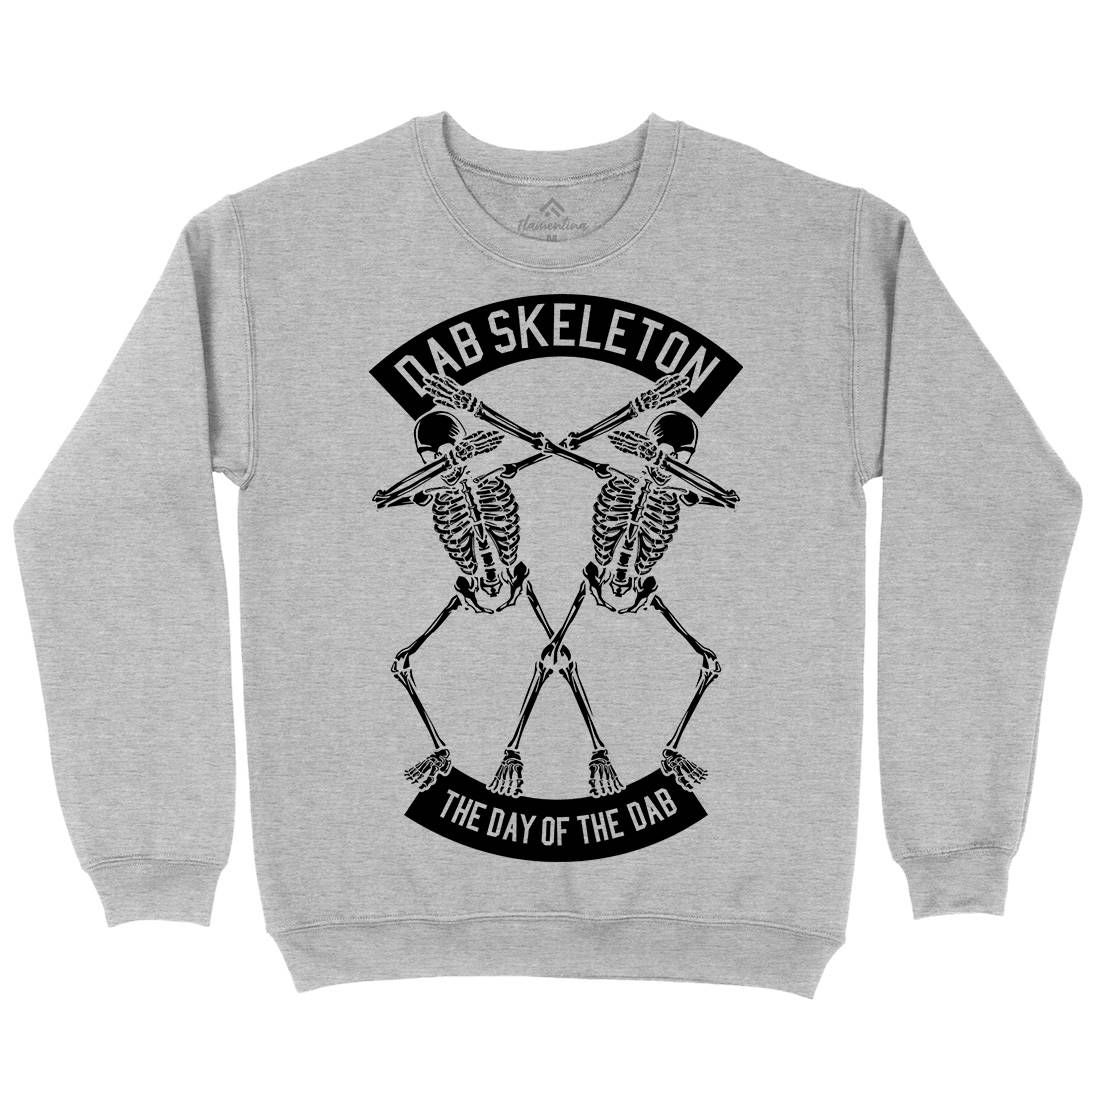 Dab Skeleton Mens Crew Neck Sweatshirt Music B524